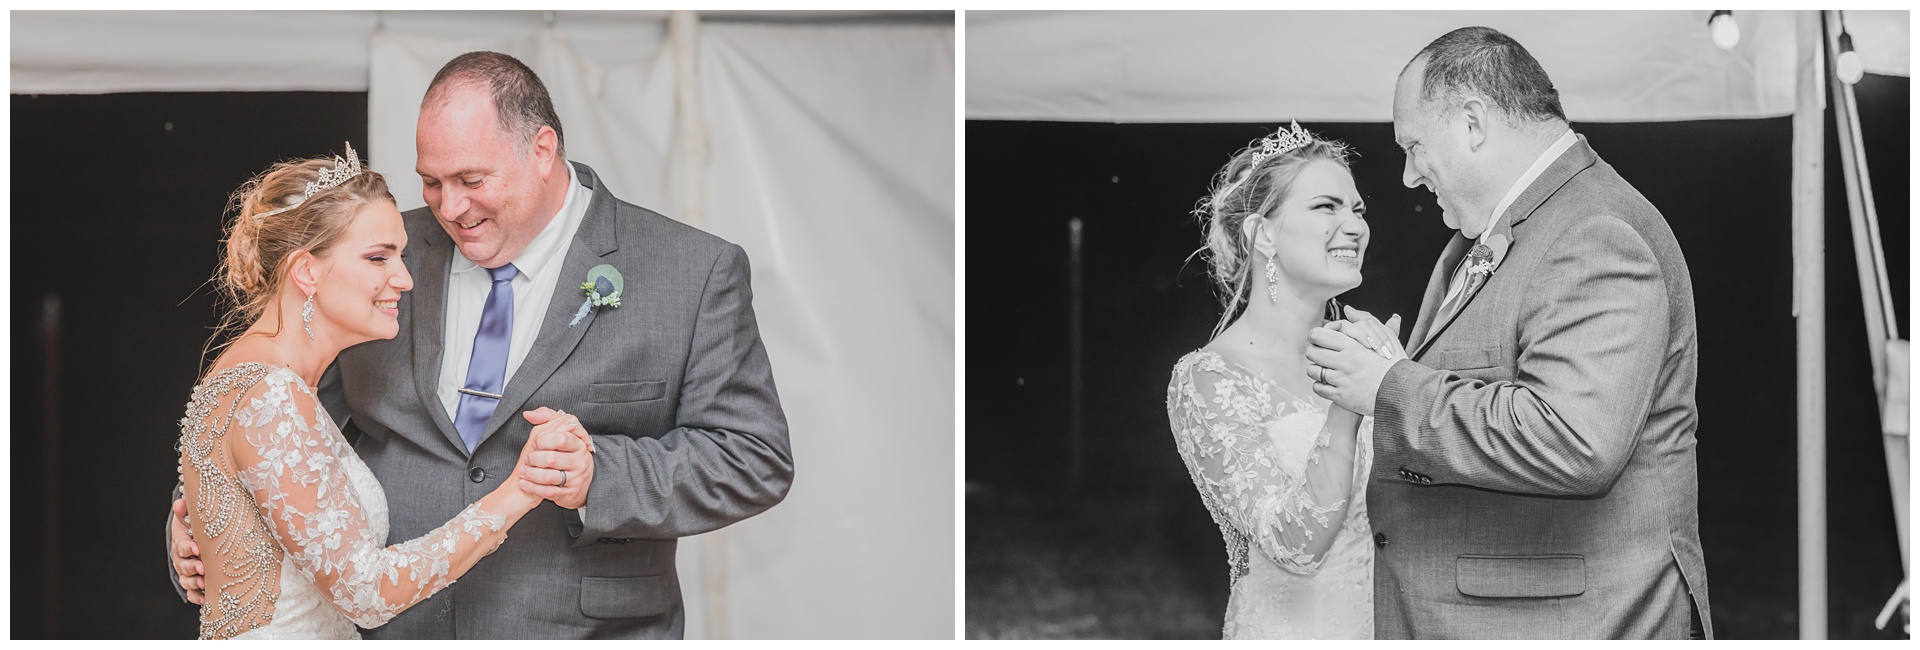 Wedding photography in Lee's Summit, Missouri, by Kansas City wedding photographers Wisdom-Watson Weddings.